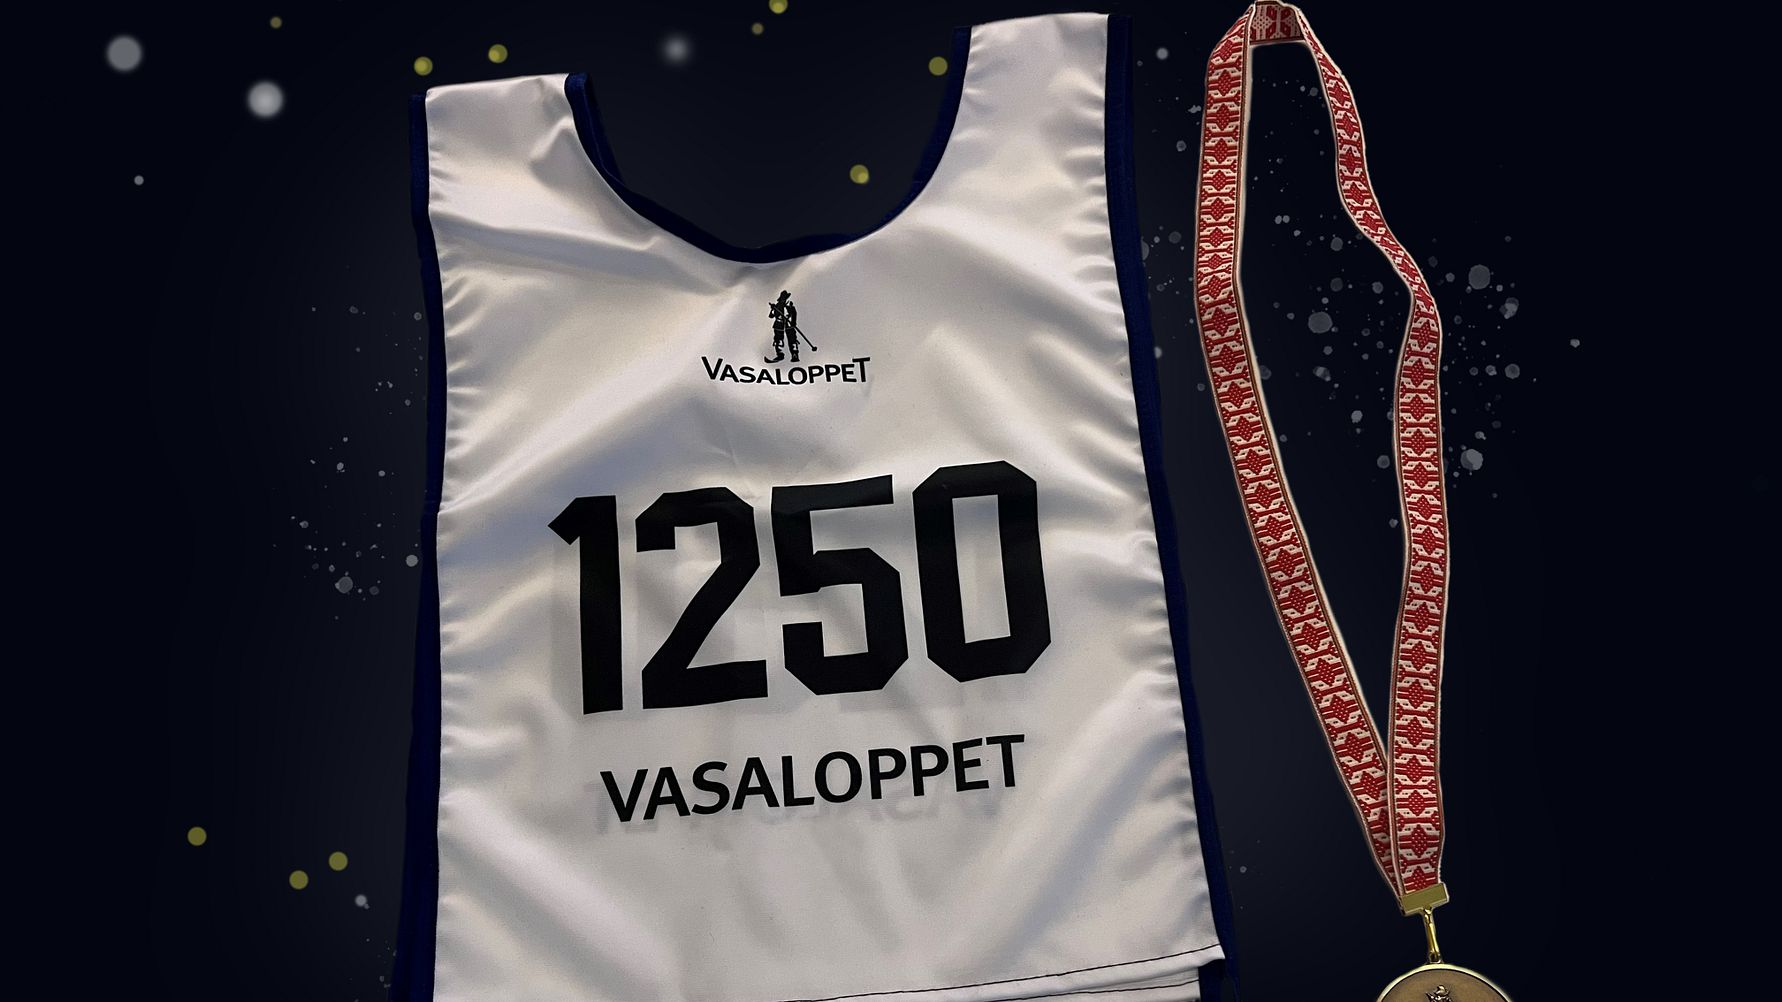 Vasaloppet accompanies Wandt Swedish space Marcus Vasaloppet astronaut to |